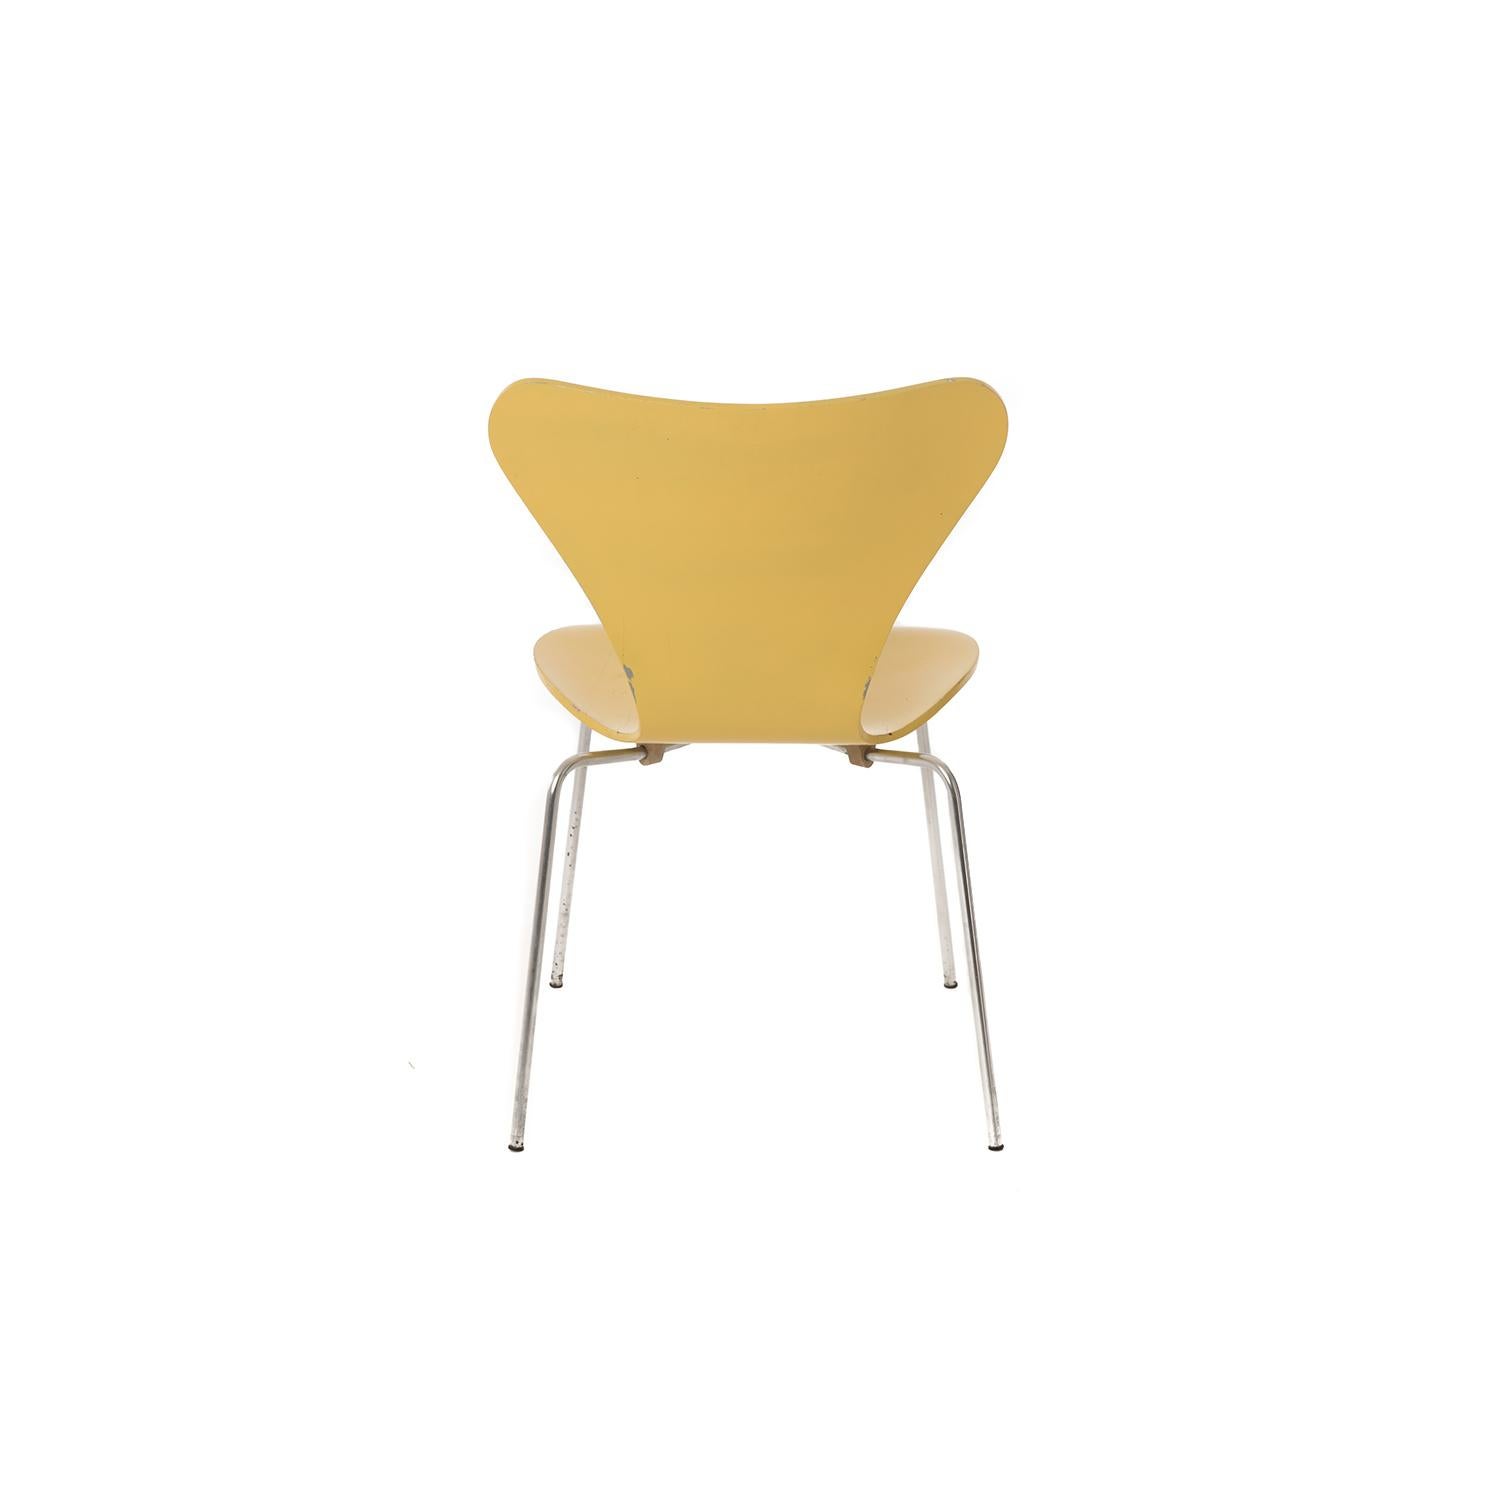 20th Century Danish Modern Series 7 Chairs by Arne Jacobsen